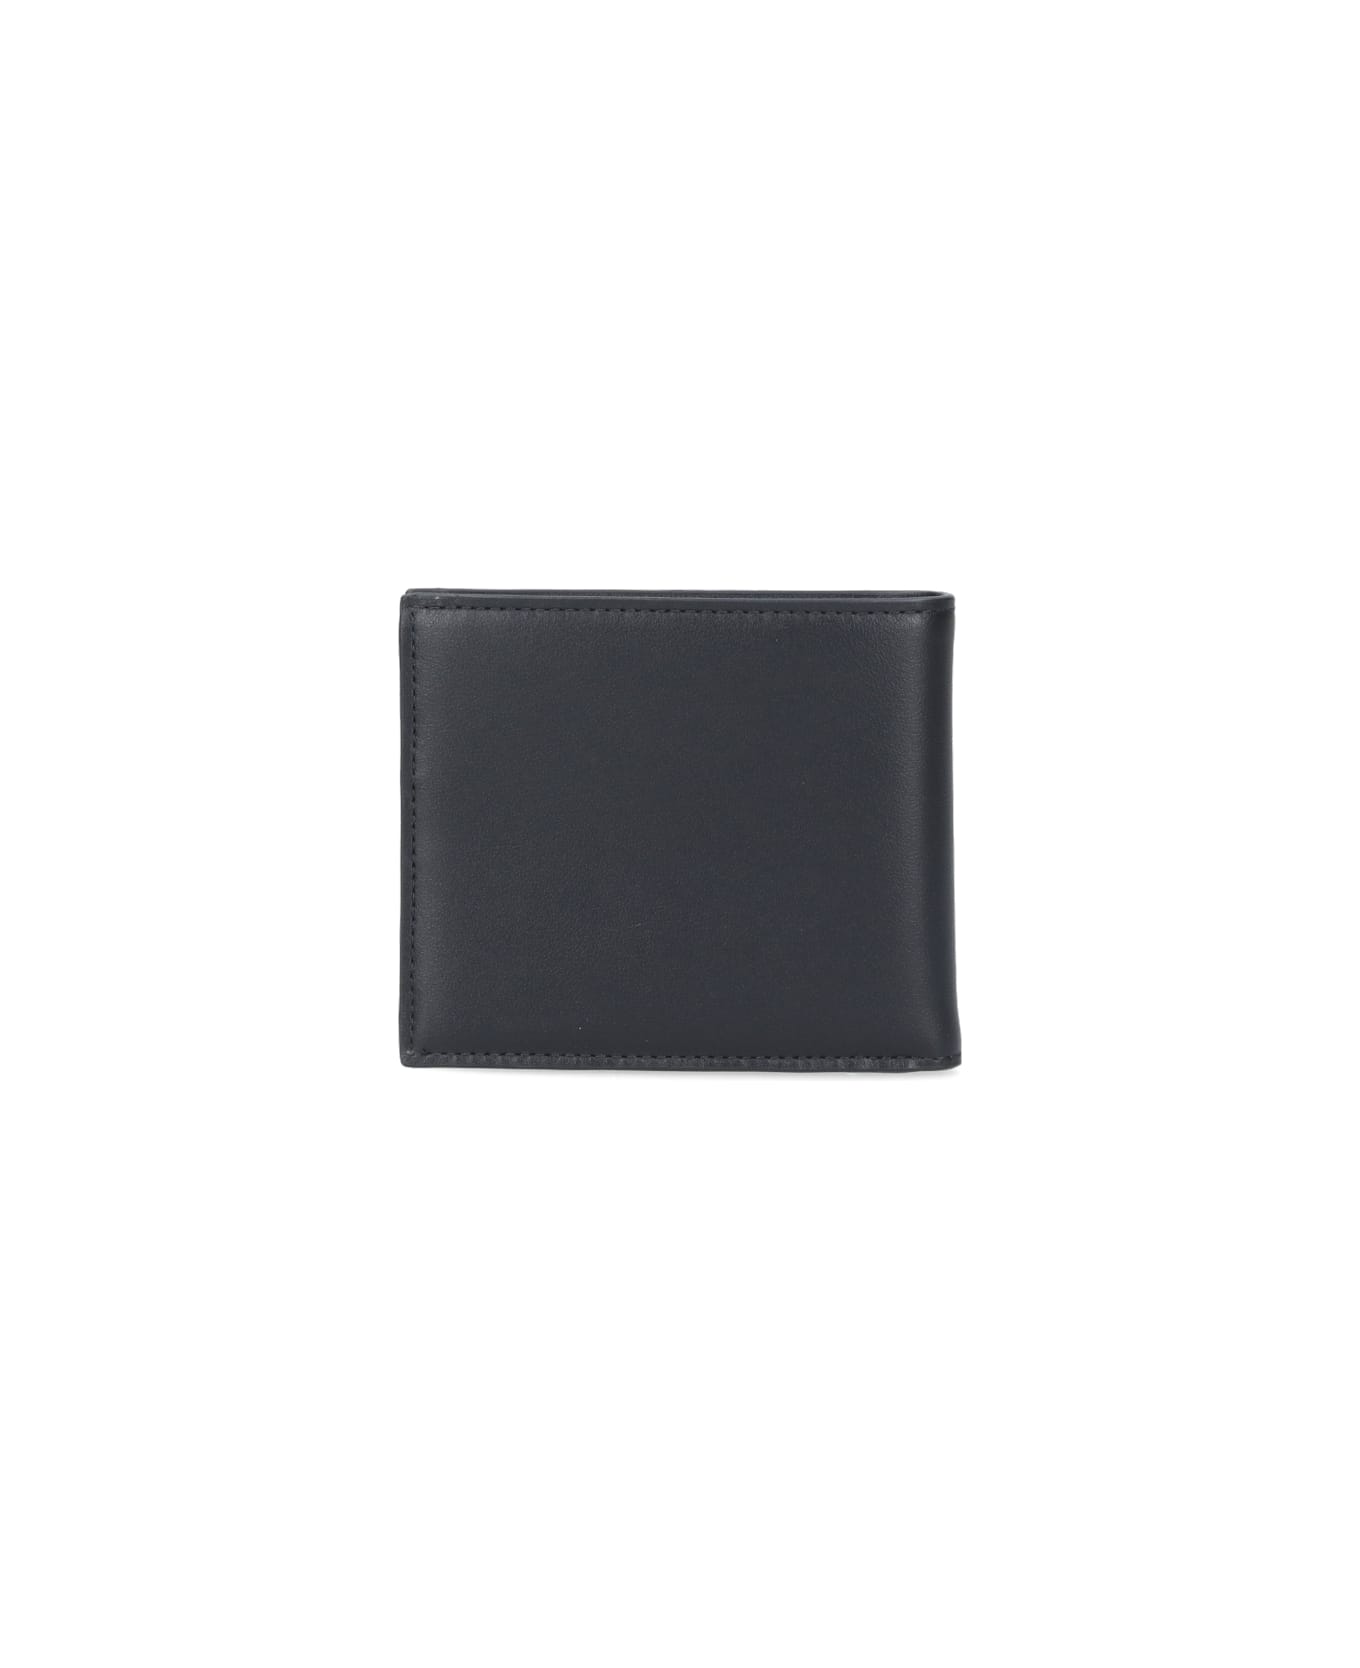 Dolce & Gabbana Bi-fold Logo Wallet - Black  